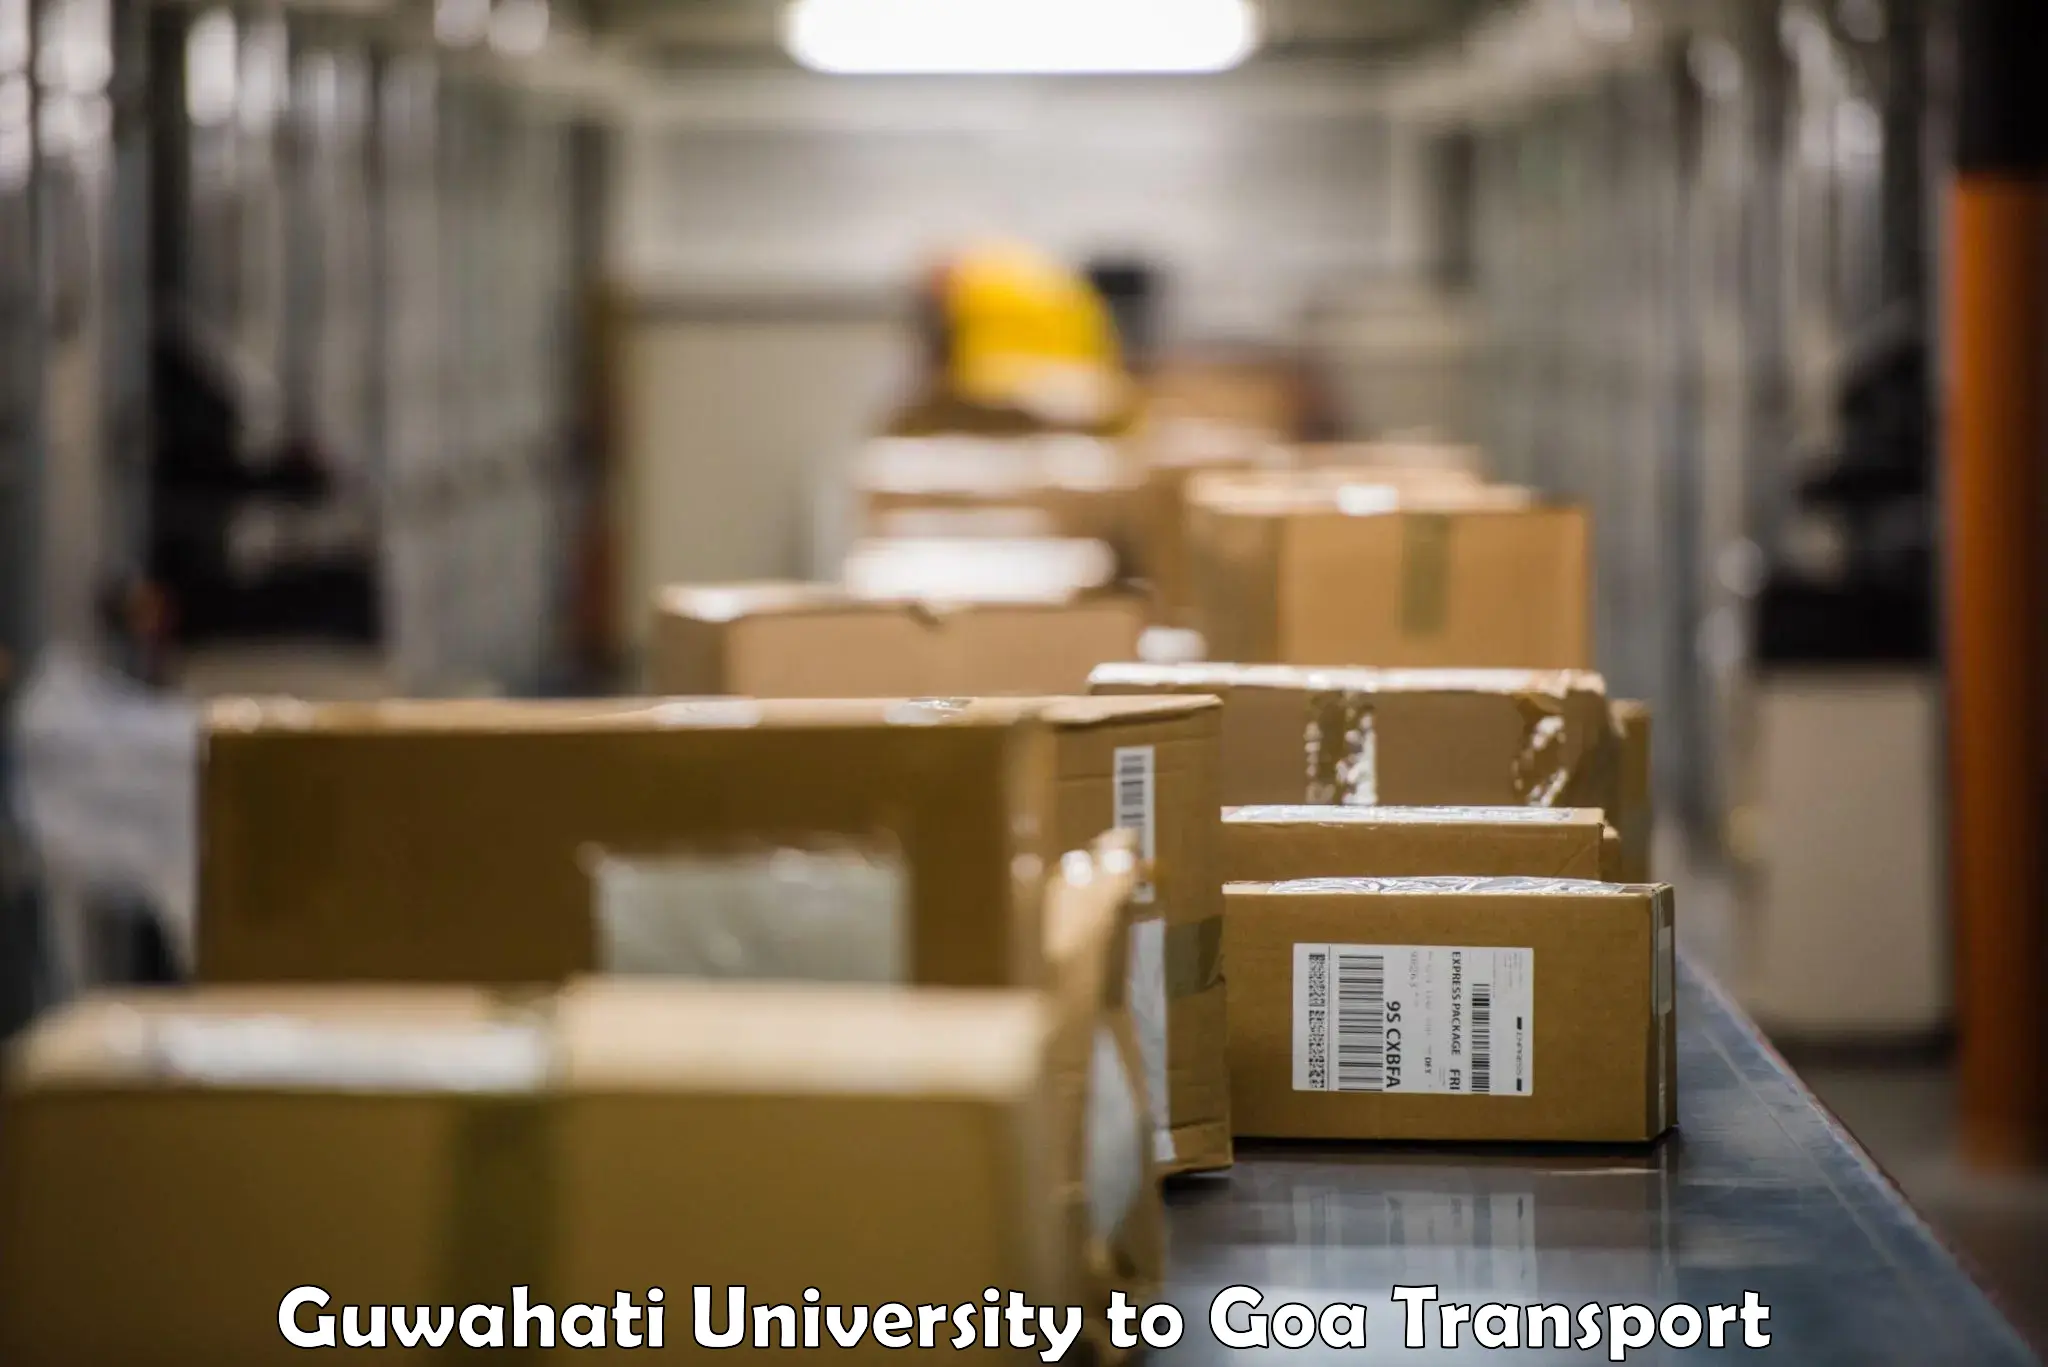 Intercity goods transport Guwahati University to Goa